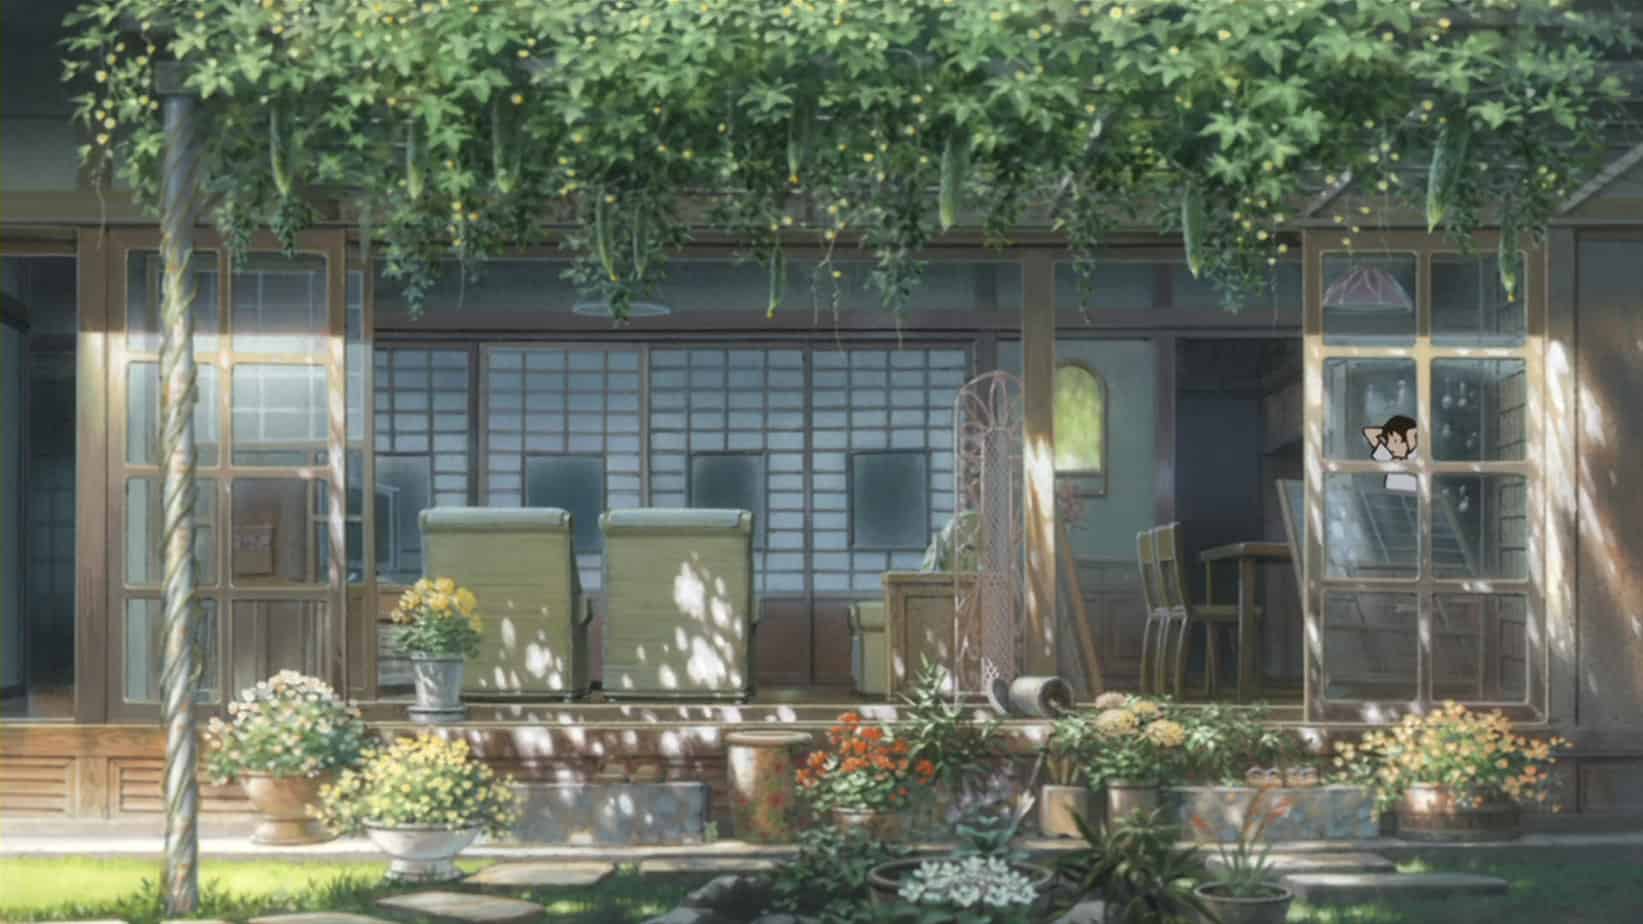 Makoto's house, worthy of a desktop image